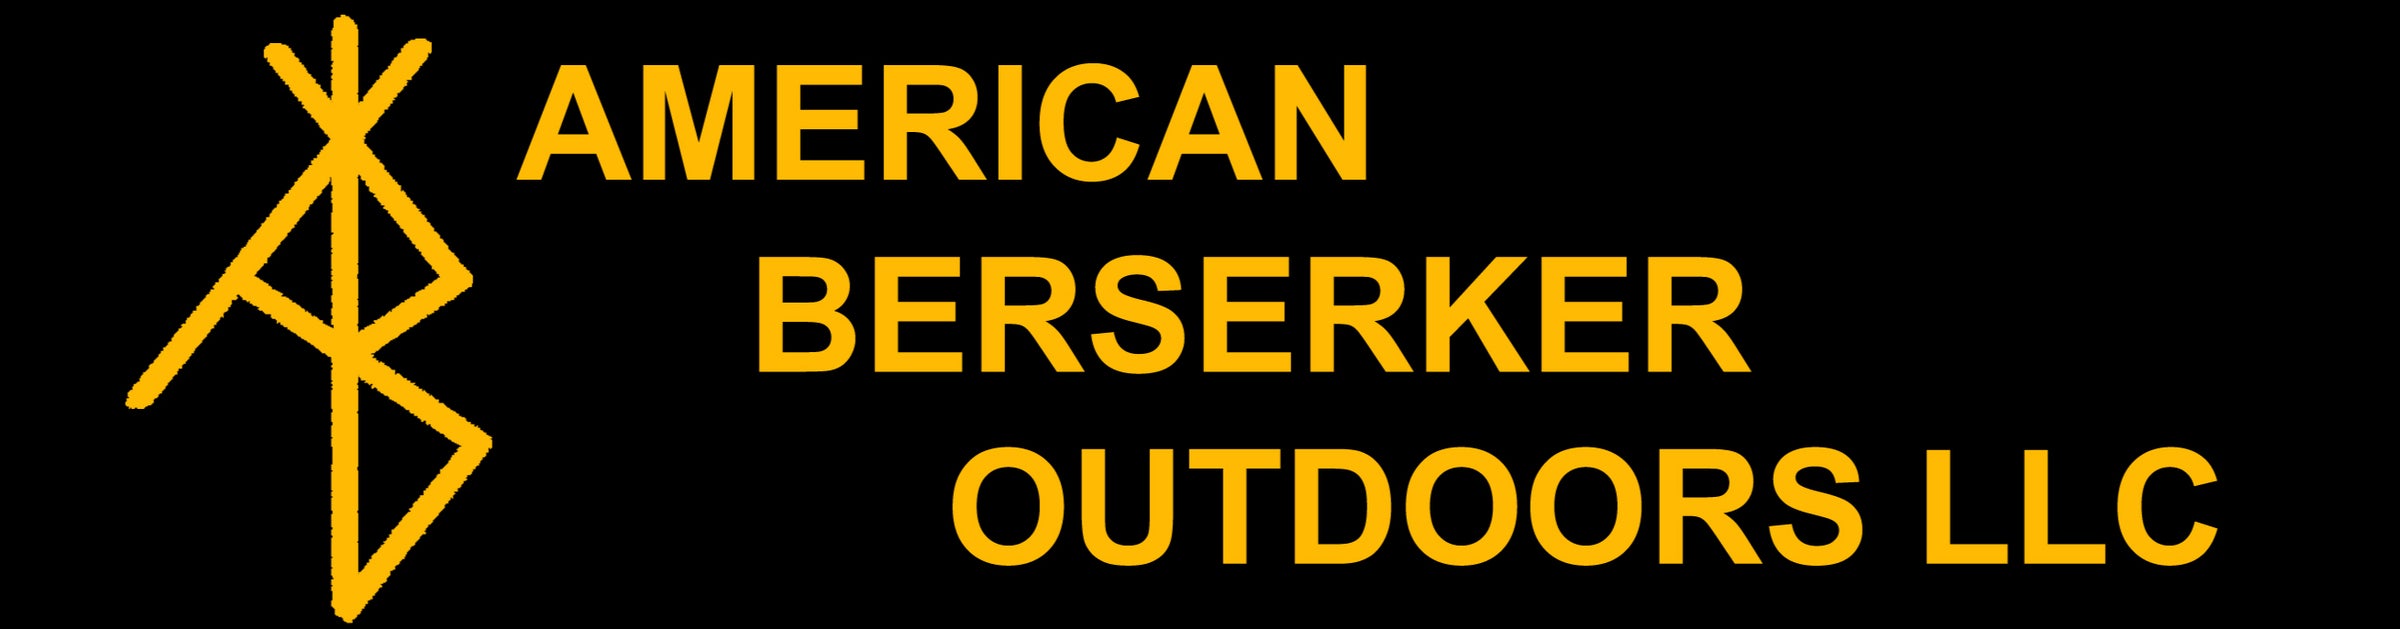 American Berserker Outdoors LLC  American Berserker Outdoors LLC